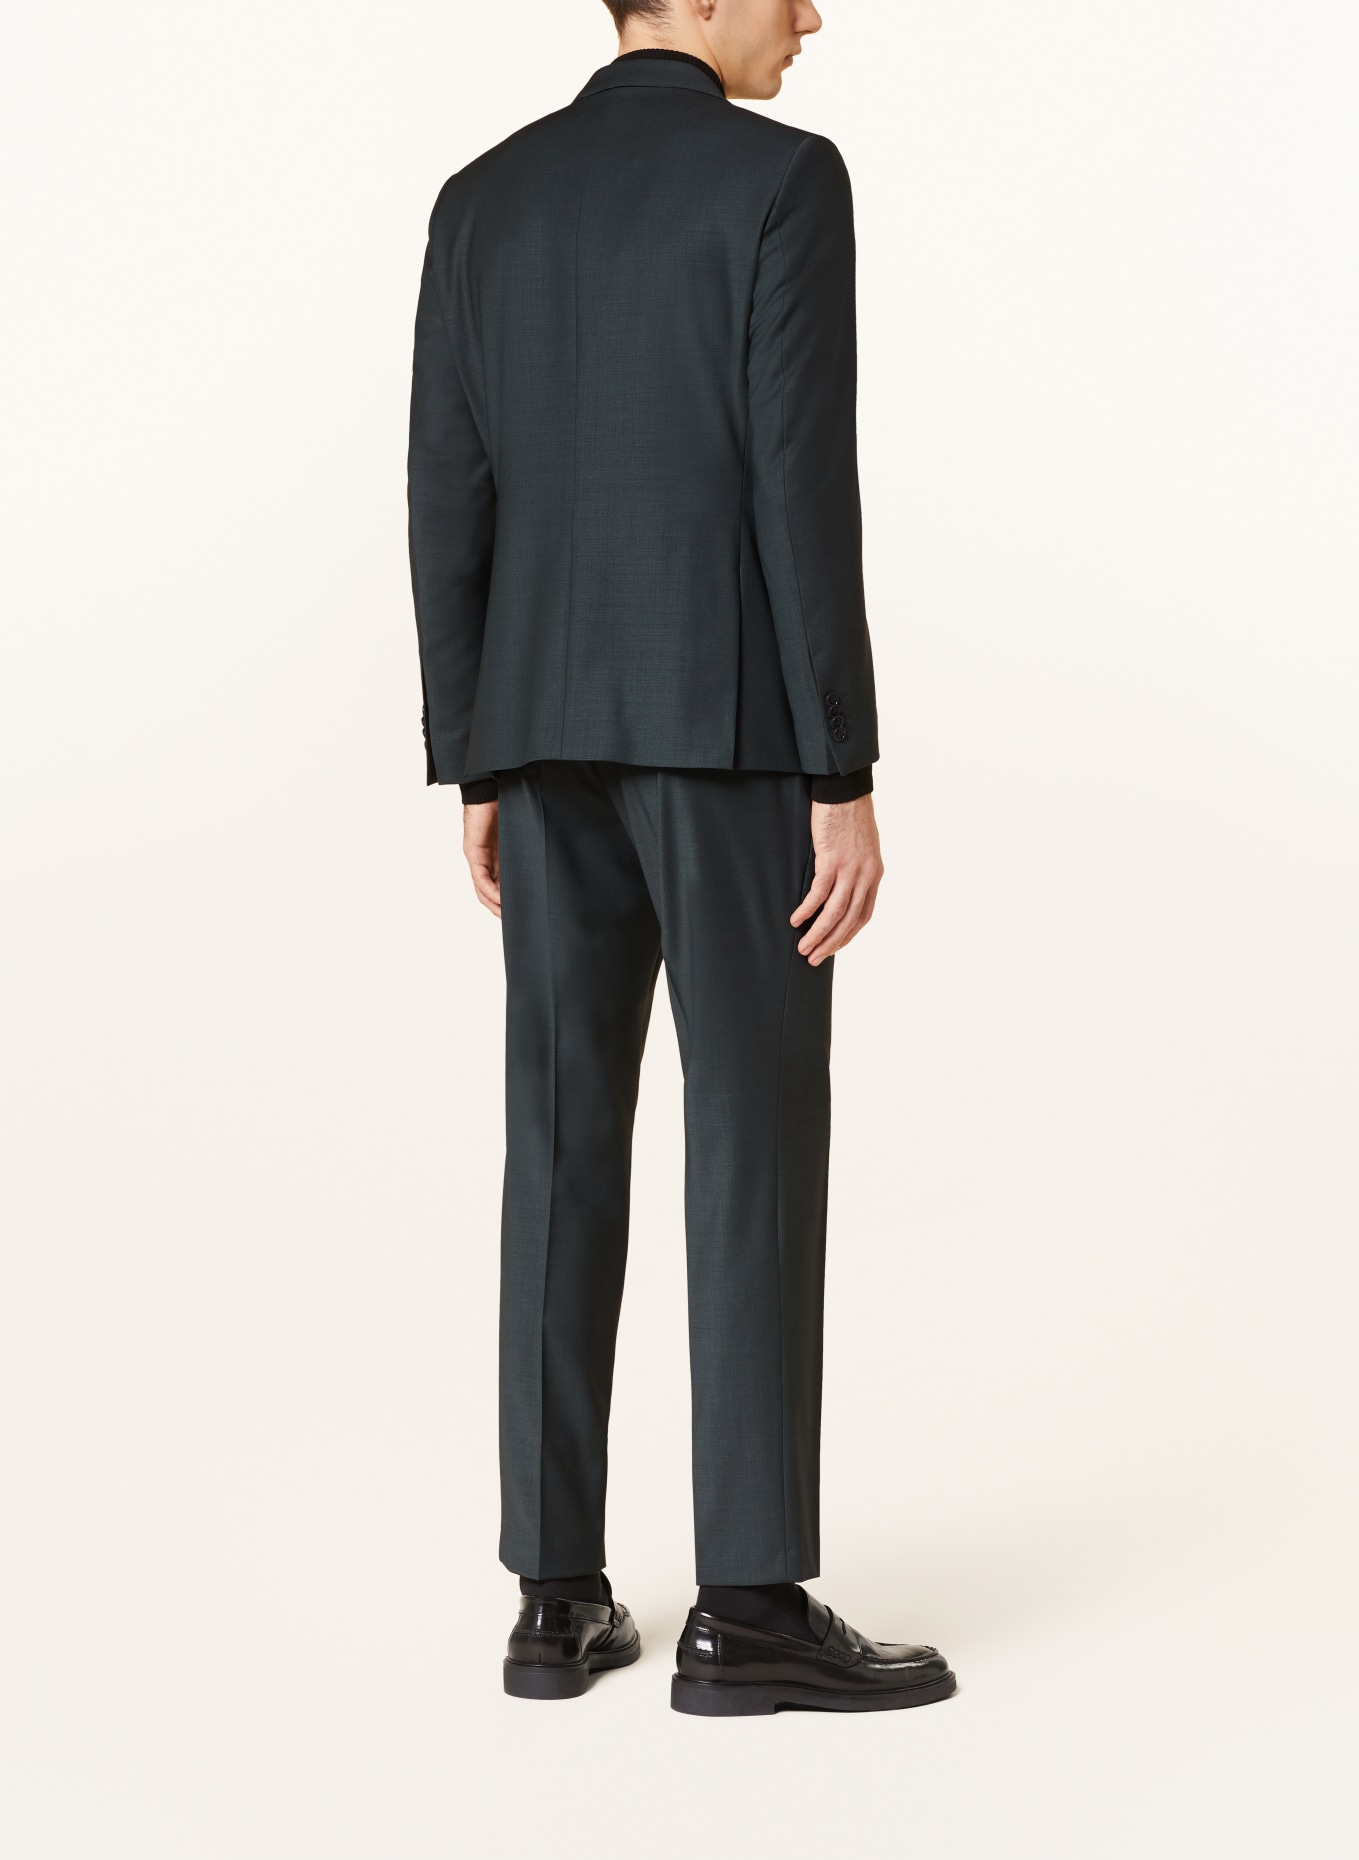 CG - CLUB of GENTS Suit jacket COLVIN slim fit, Color: 53 gruen dunkel (Image 3)